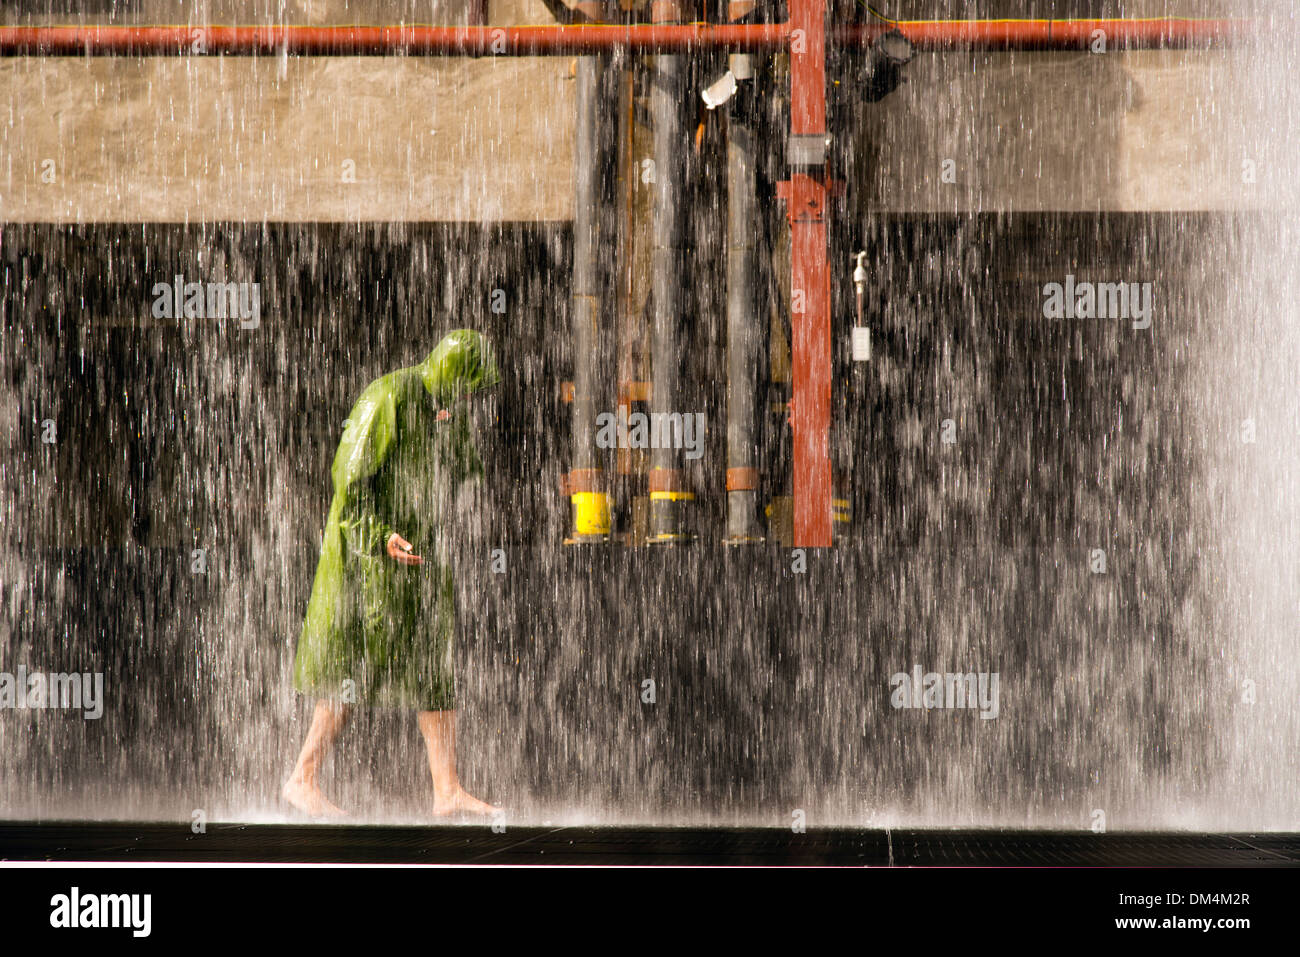 Germany, industry, person, water, splash, rain protection, rain, rainy, wet, weather Stock Photo